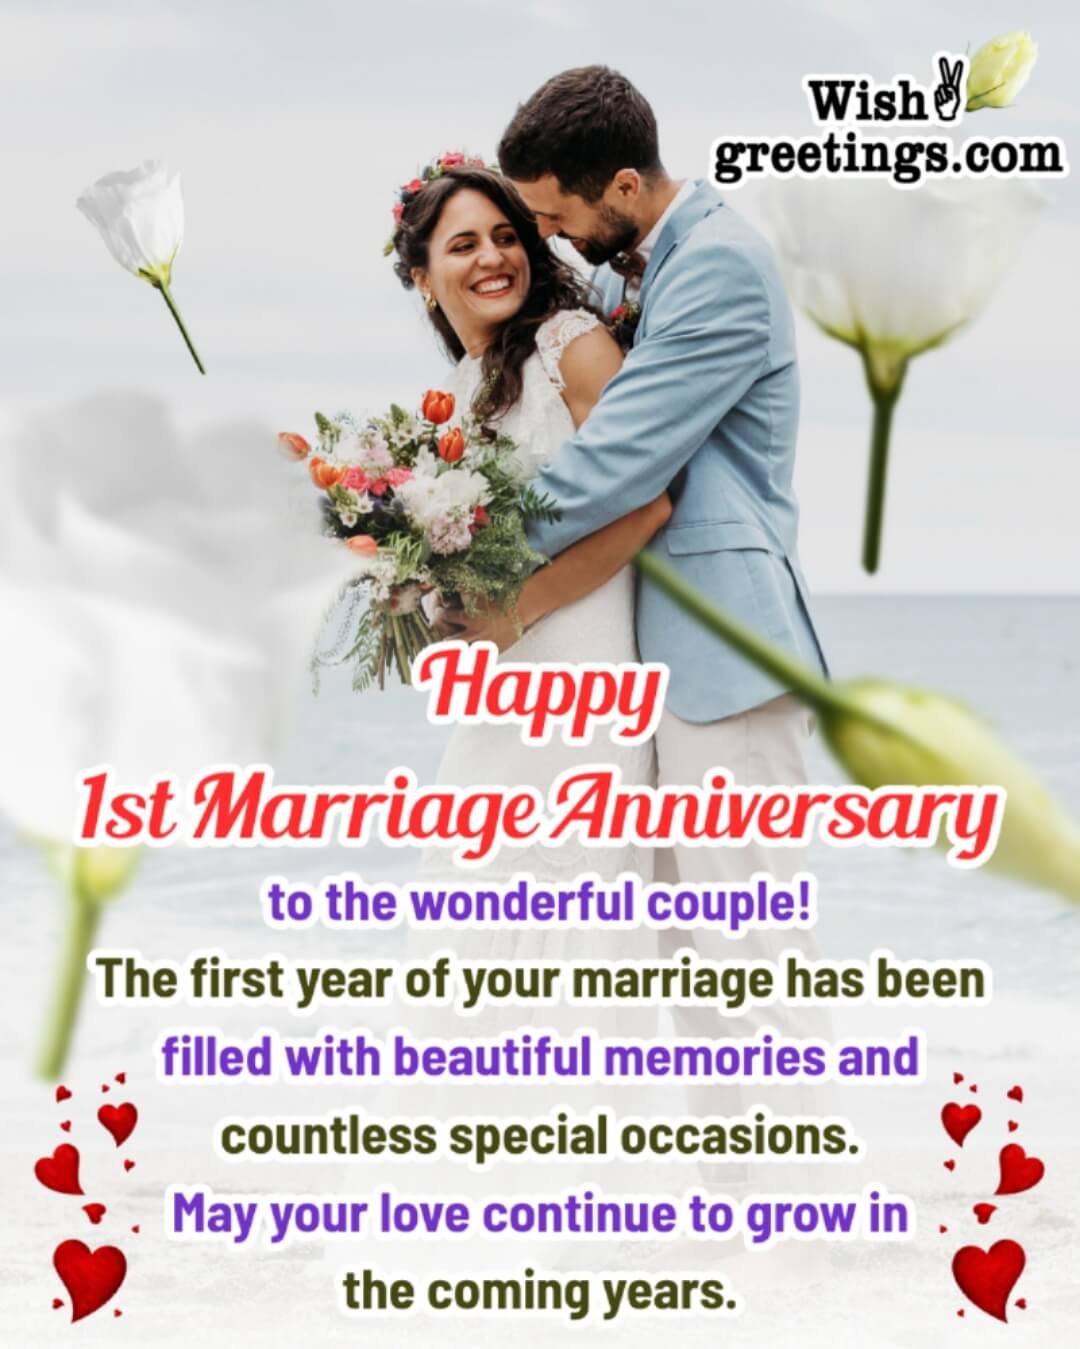 Happy 1st Marriage Anniversary Wish To Couple